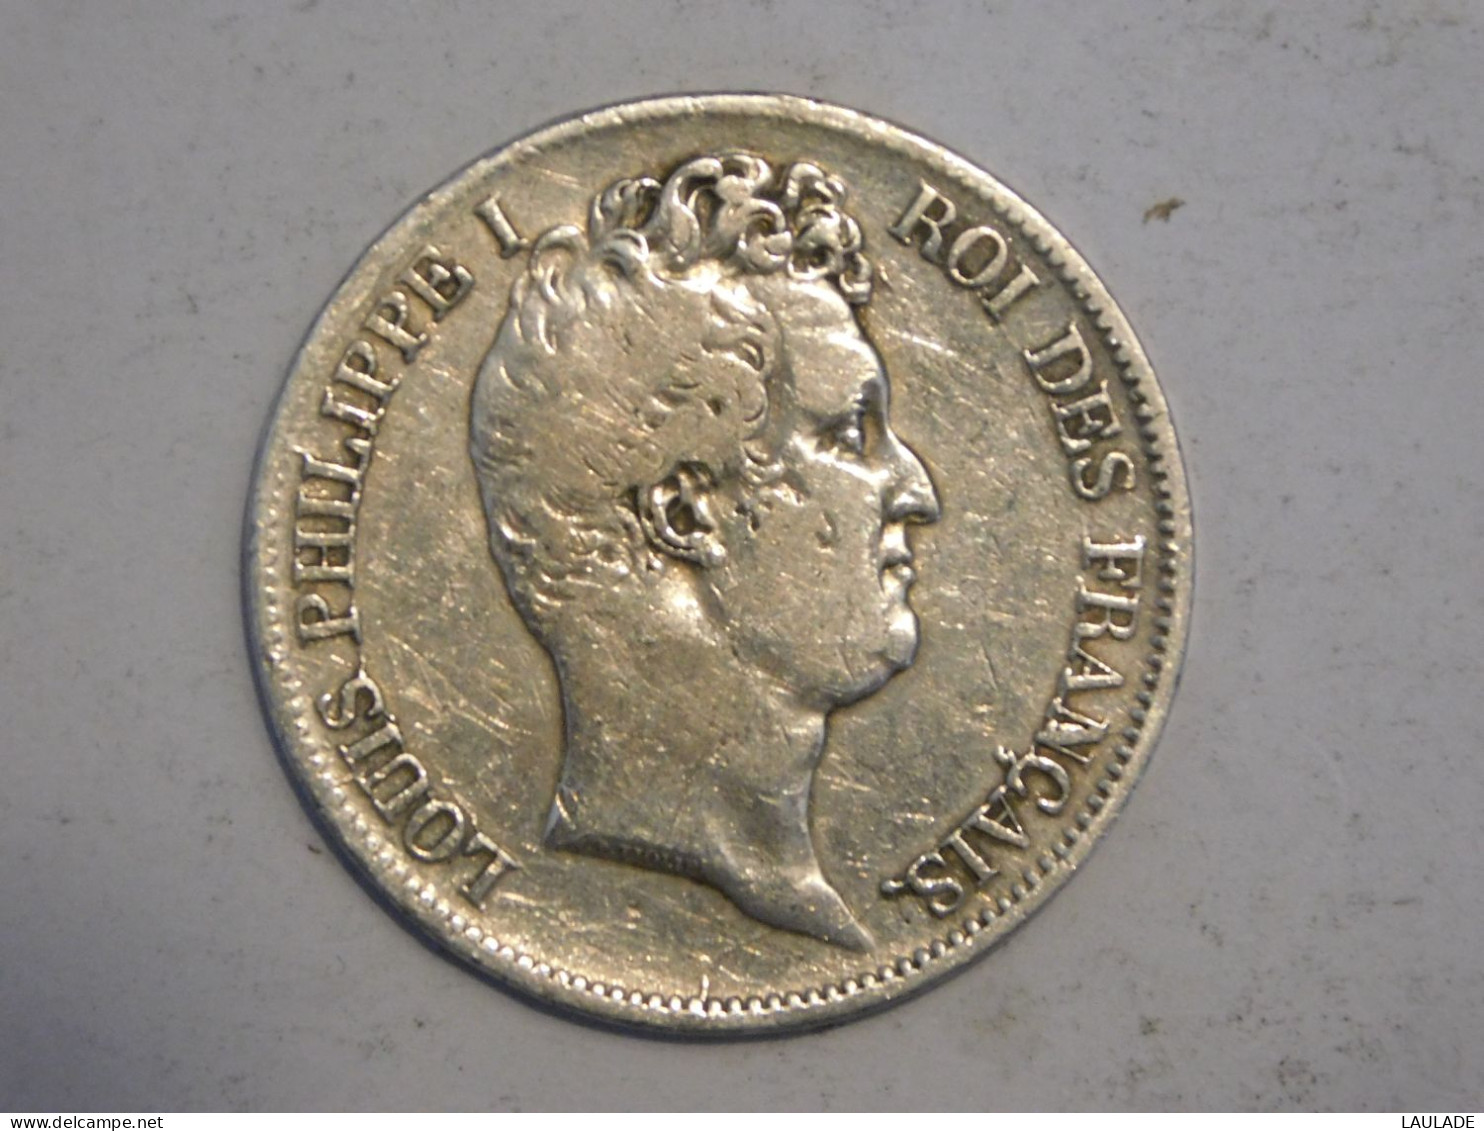 FRANCE 5 Francs 1831 B - Silver, Argent Franc - 5 Francs